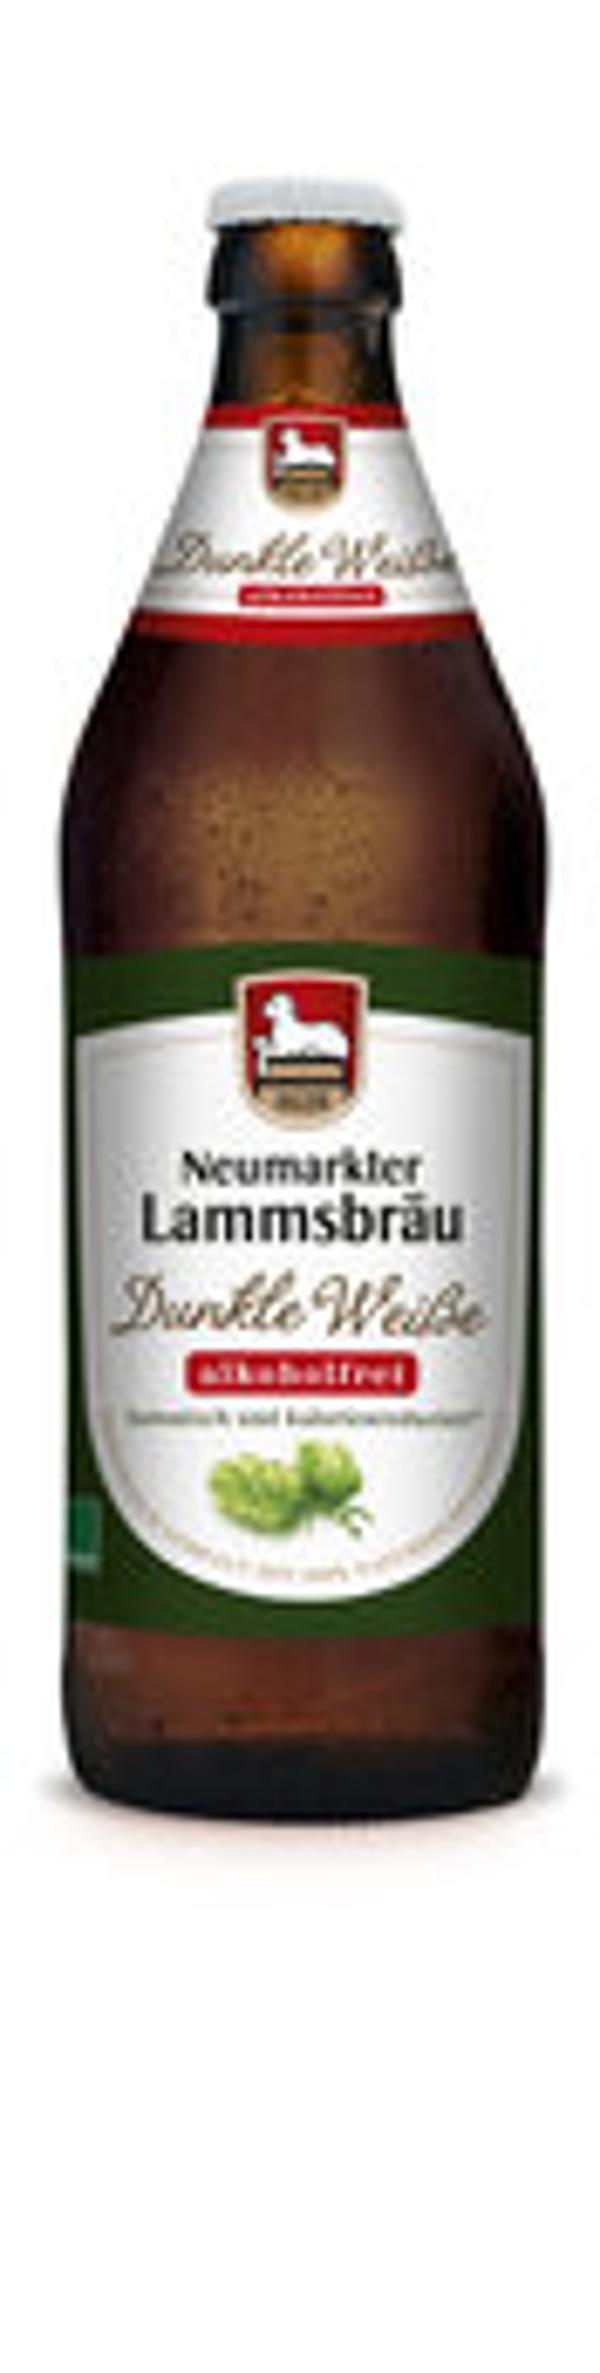 Produktfoto zu Lammsbräu Dunkle Weiße alkoholfrei 10*0,5L Kiste